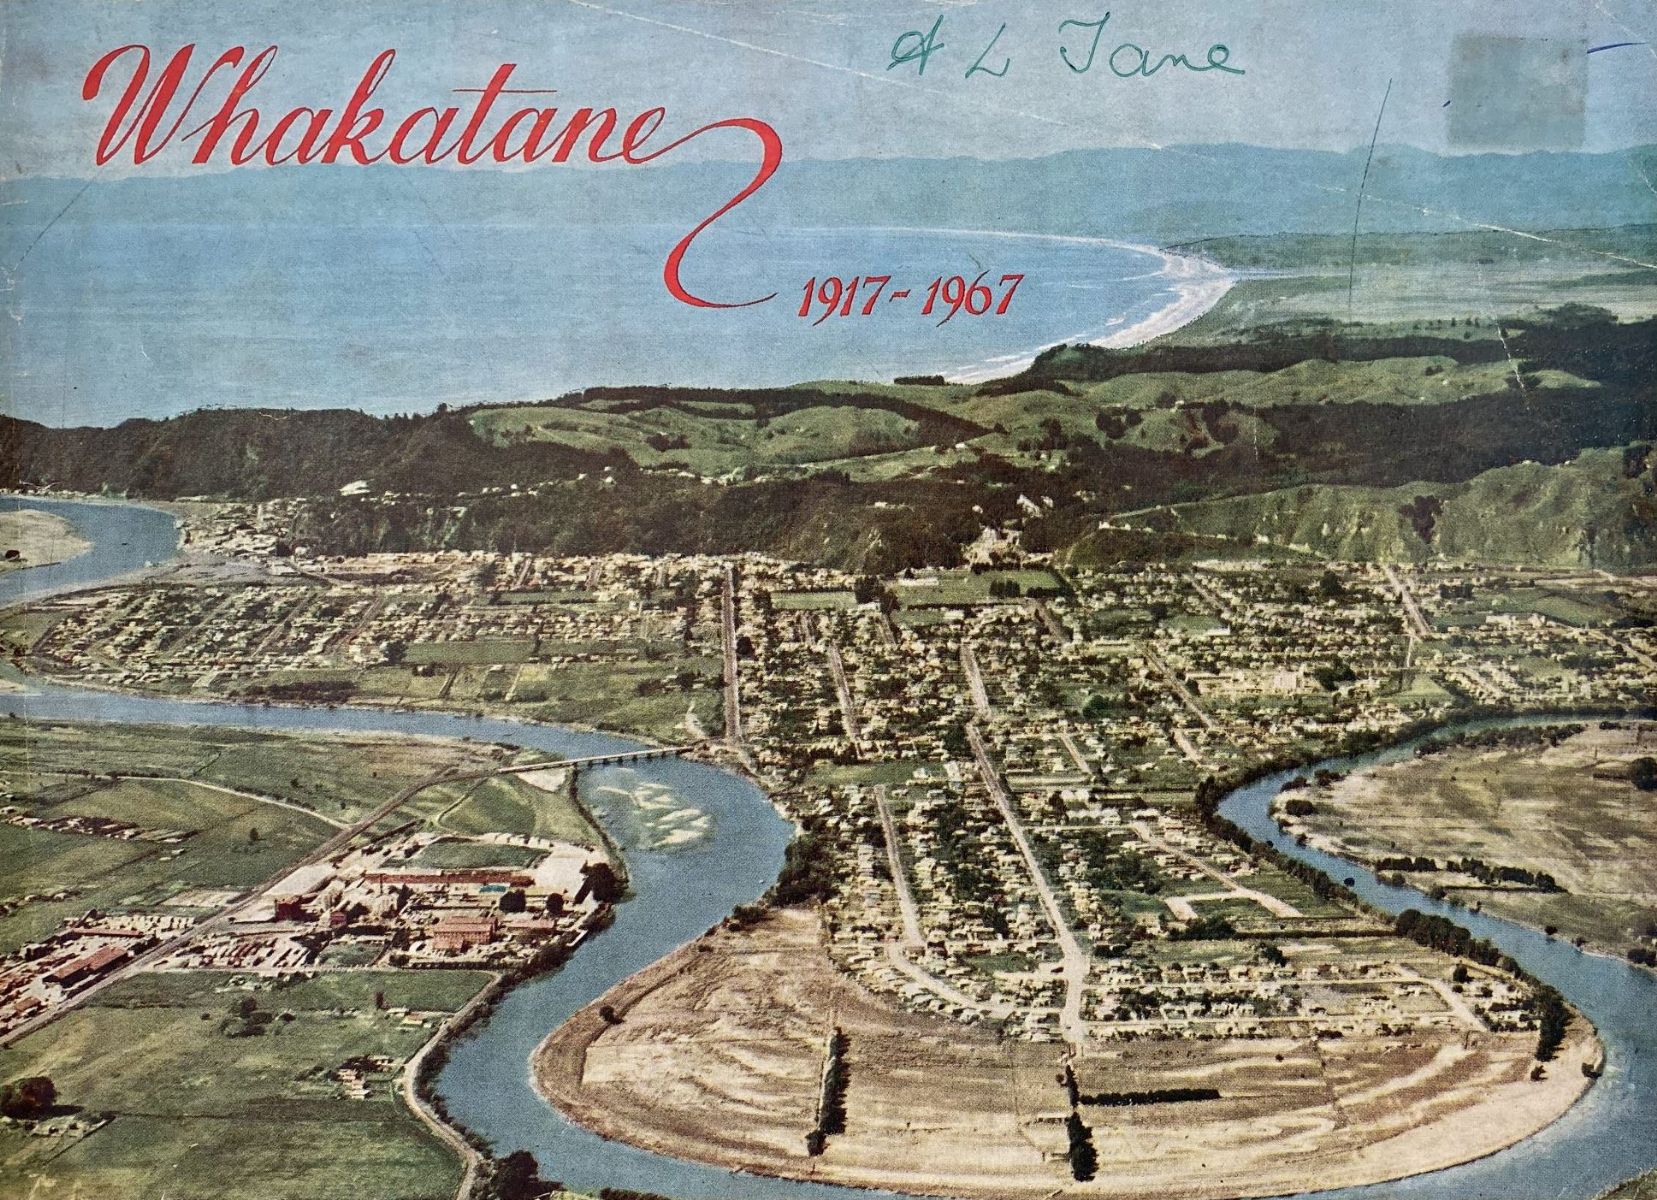 WHAKATANE 1917-1967: An historical survey of the Town